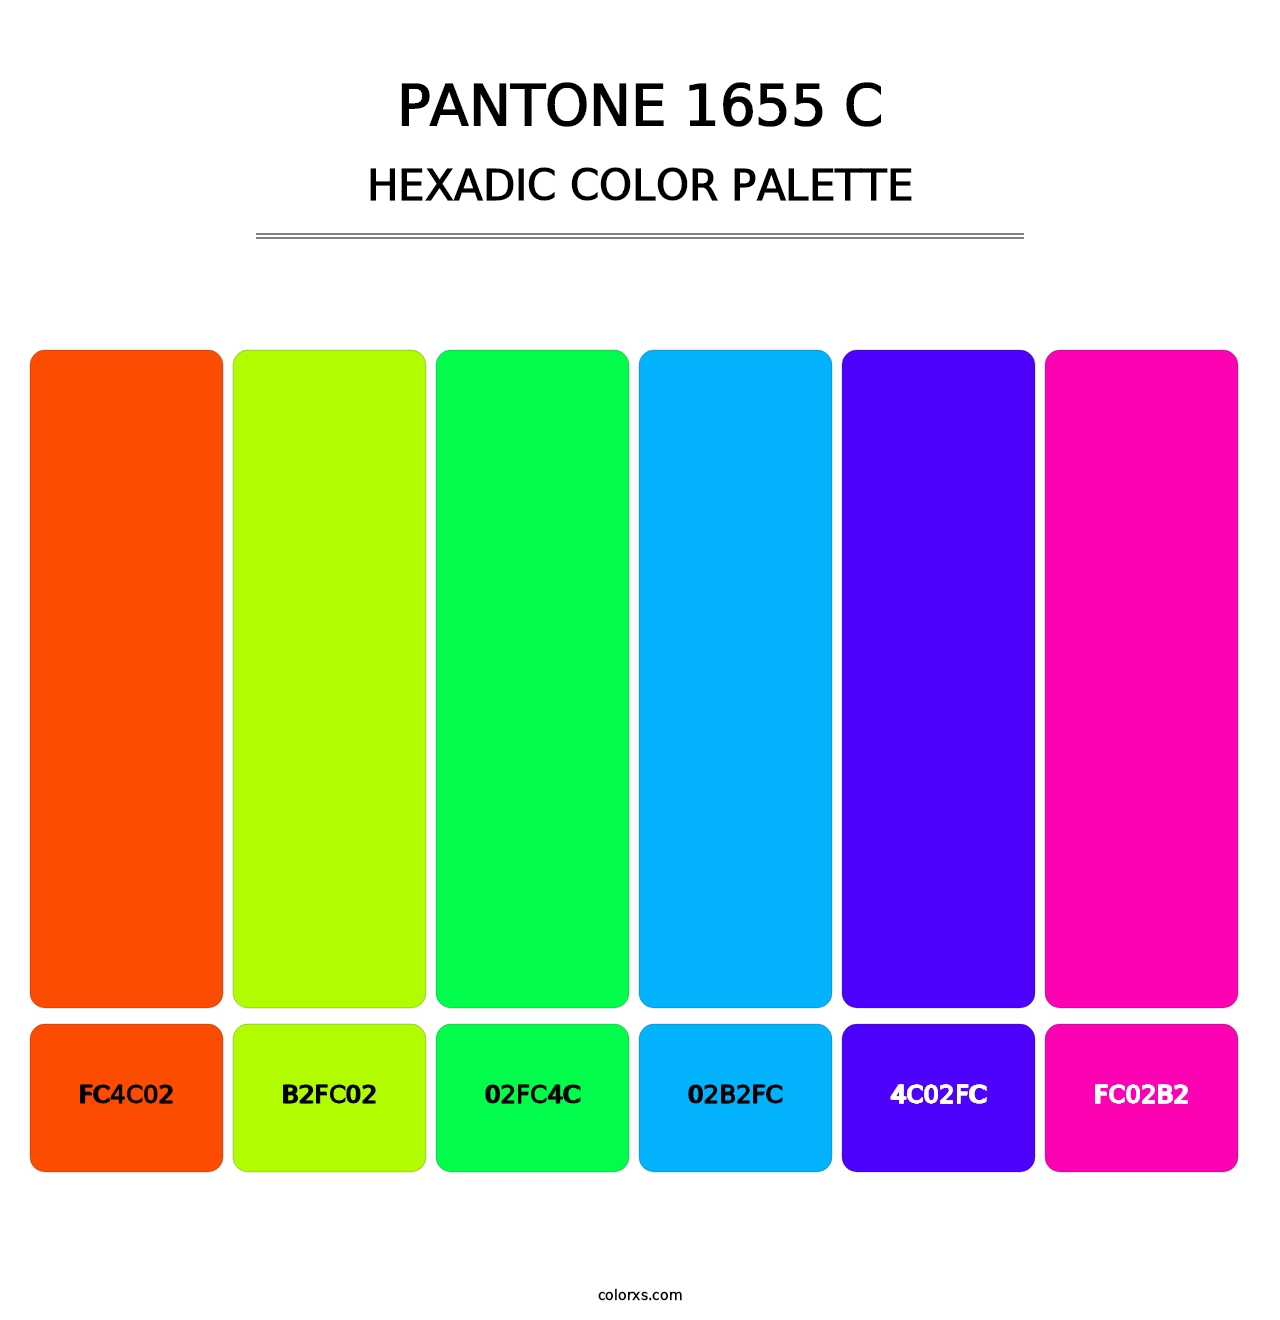 PANTONE 1655 C - Hexadic Color Palette